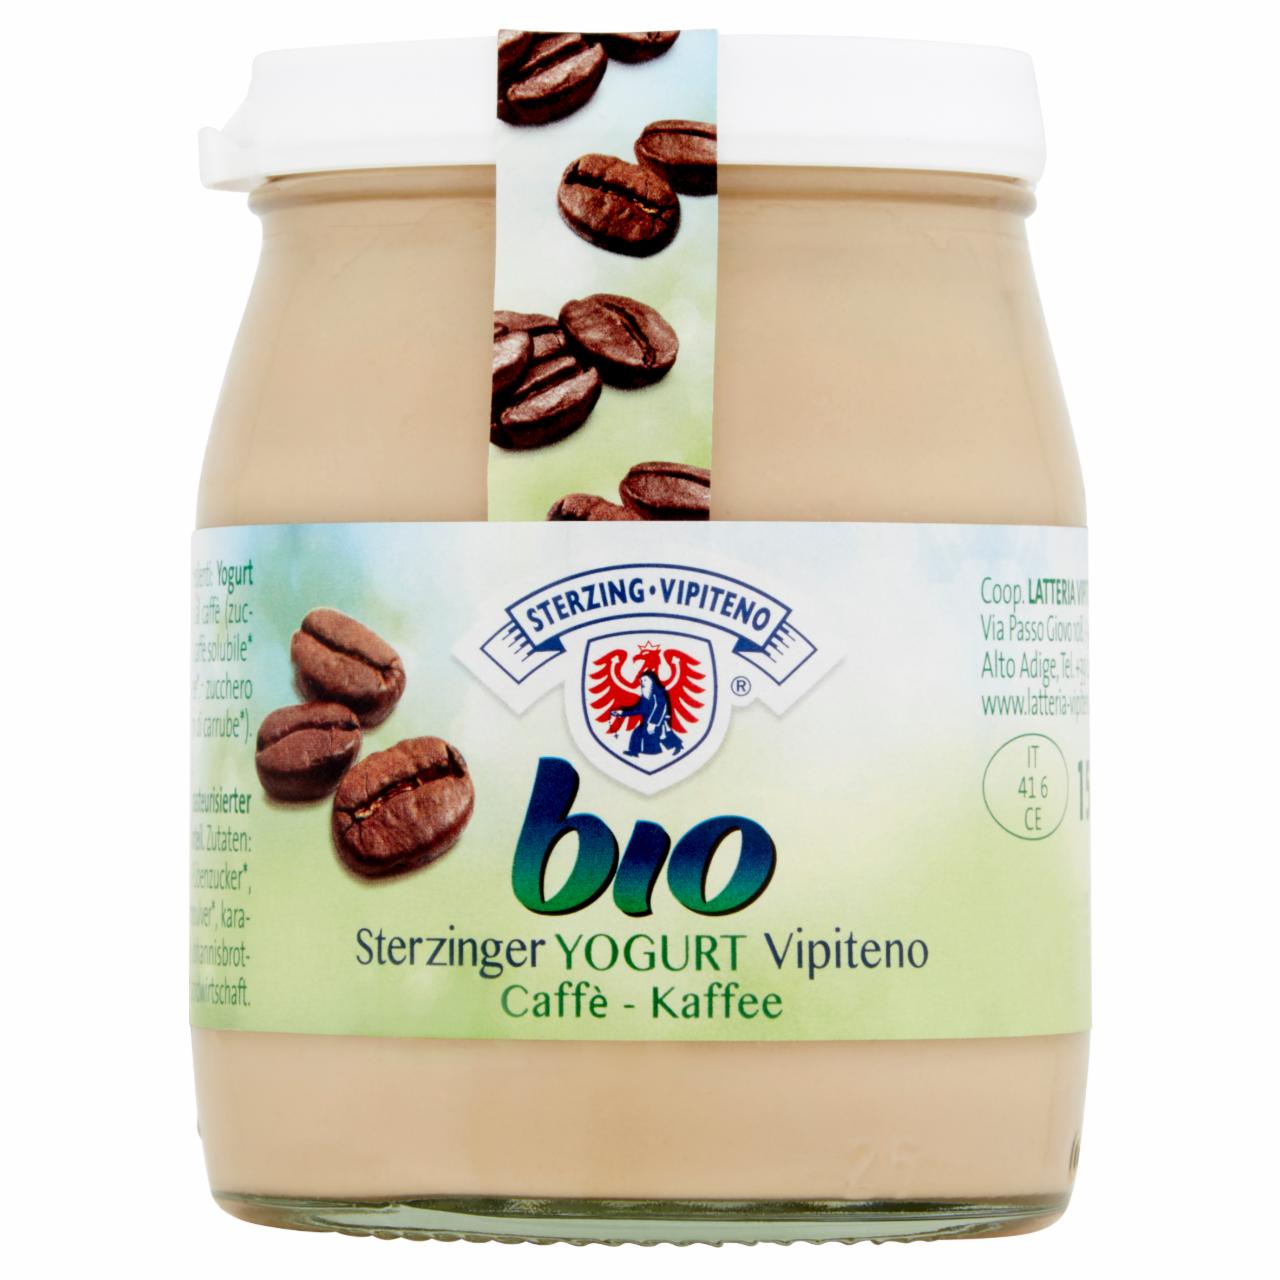 Fotografie - Bio Joghurt aus Heumilch latte fieno Sterzing Vipiteno